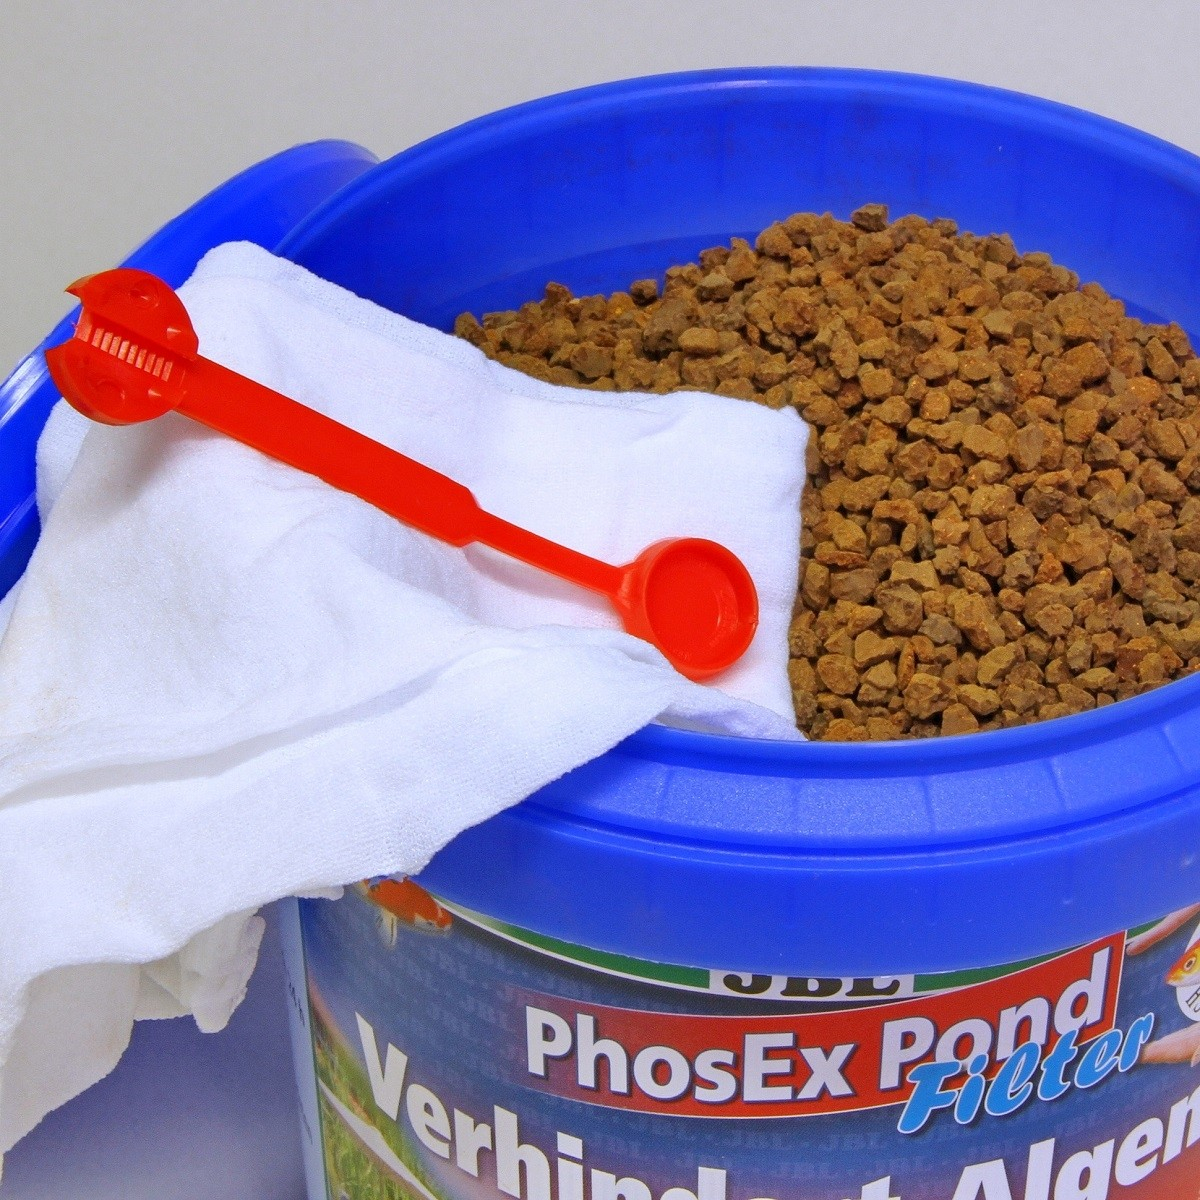 JBL PhosEx Pond Filter tegen fosfaat in vijvers